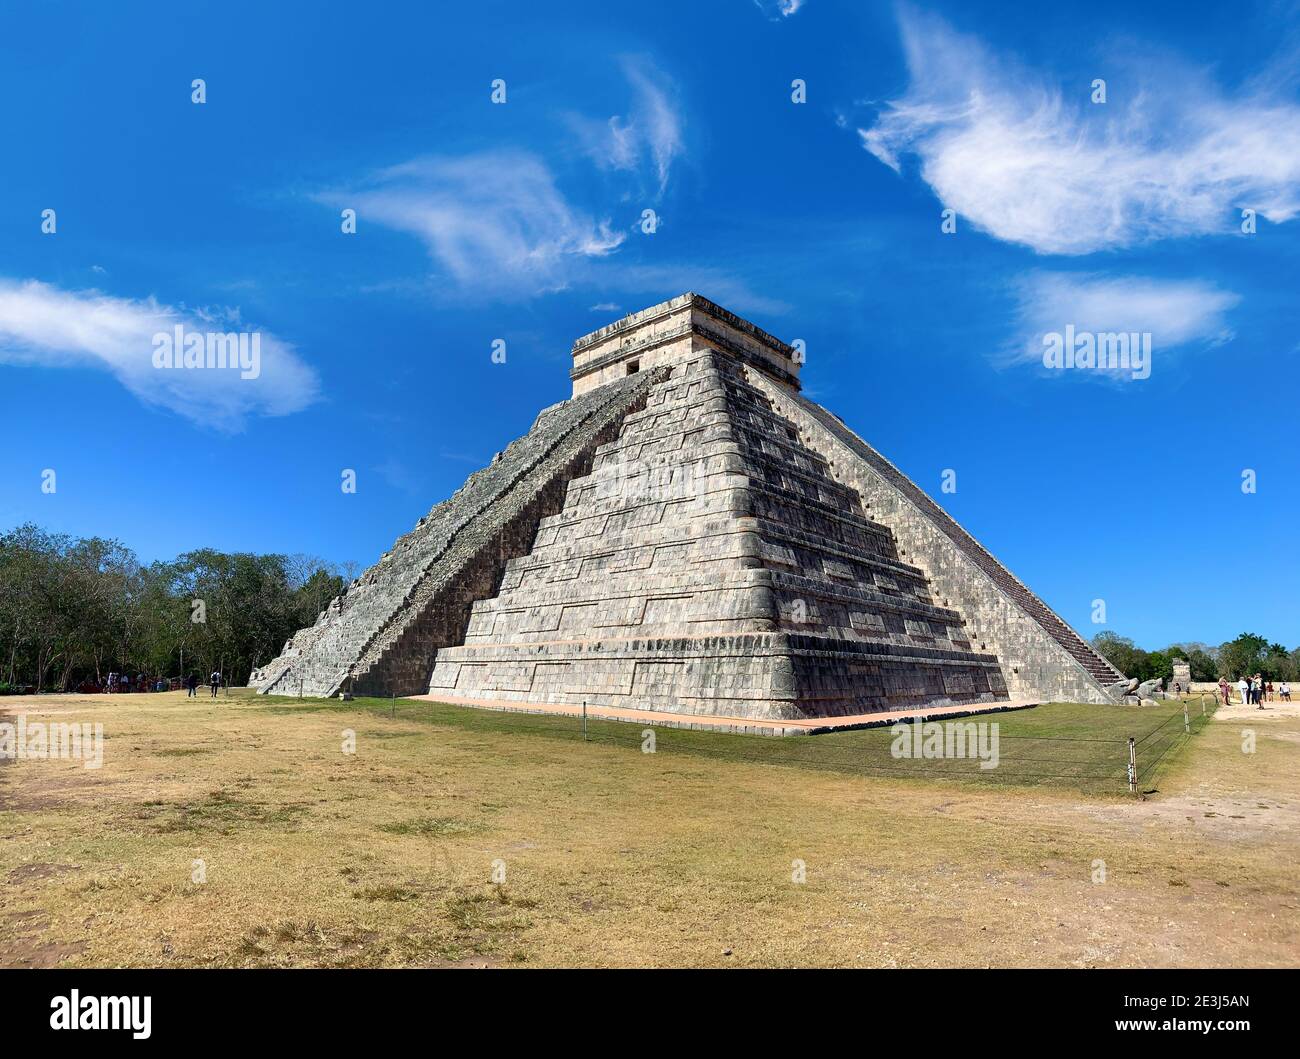 El Castillo pyramid in the ancient mayan ruins of Chichen Itza, Yucatan peninsula, Mexico Stock Photo